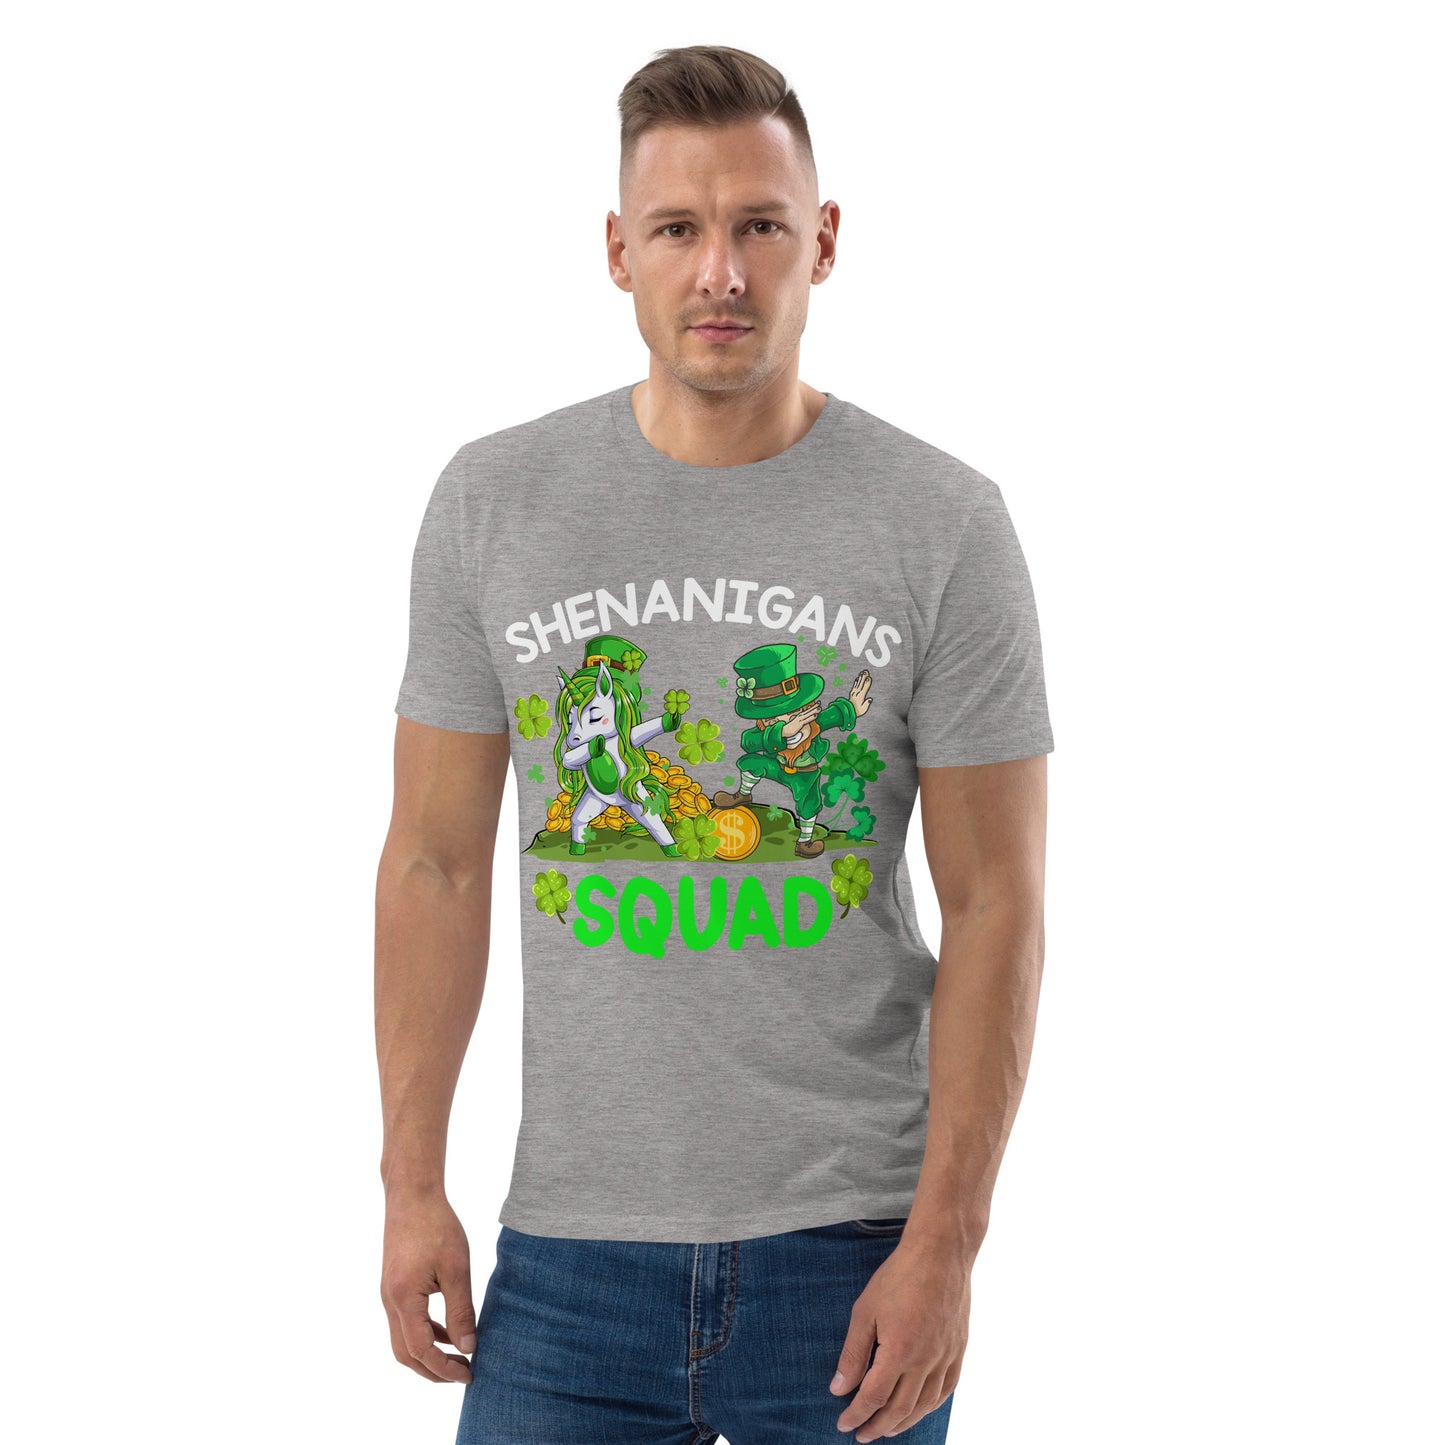 Shenanigans-Squad Unisex-Bio-Baumwoll-T-Shirt